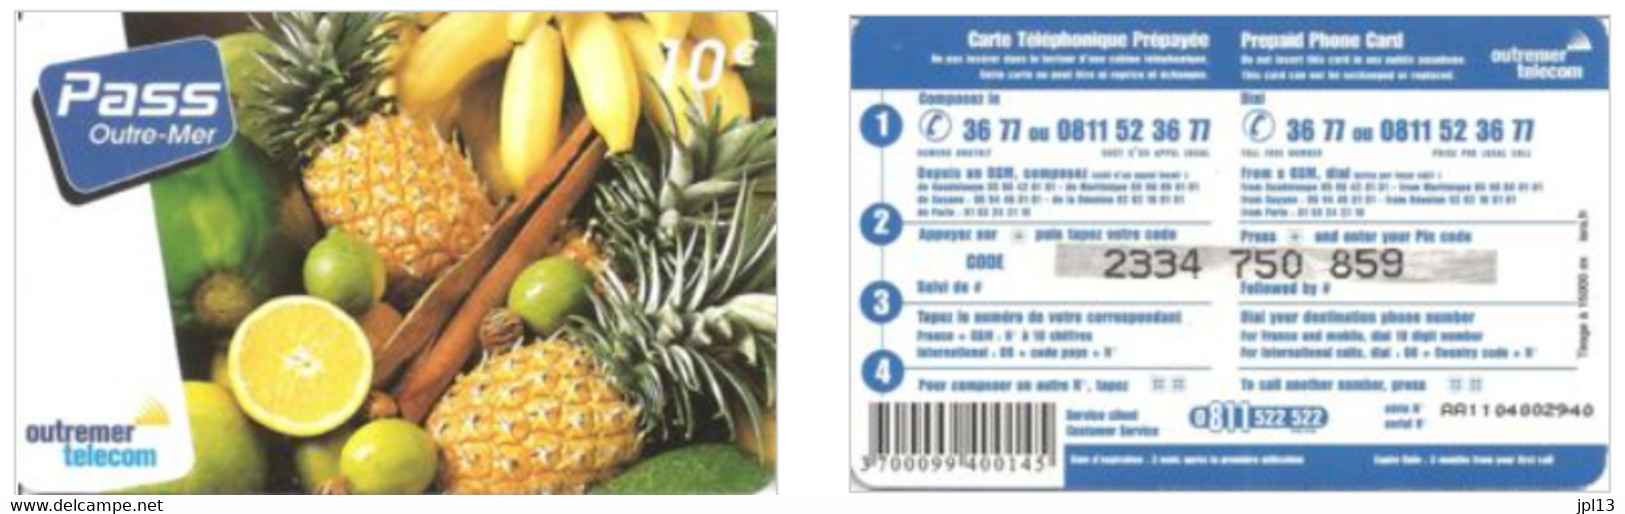 Carte Prépayée Outremer Telecom 10€ Caribbean Fruits (Pass Outre-Mer Logo), Tirage 31.500 Ex. - Antillen (Französische)